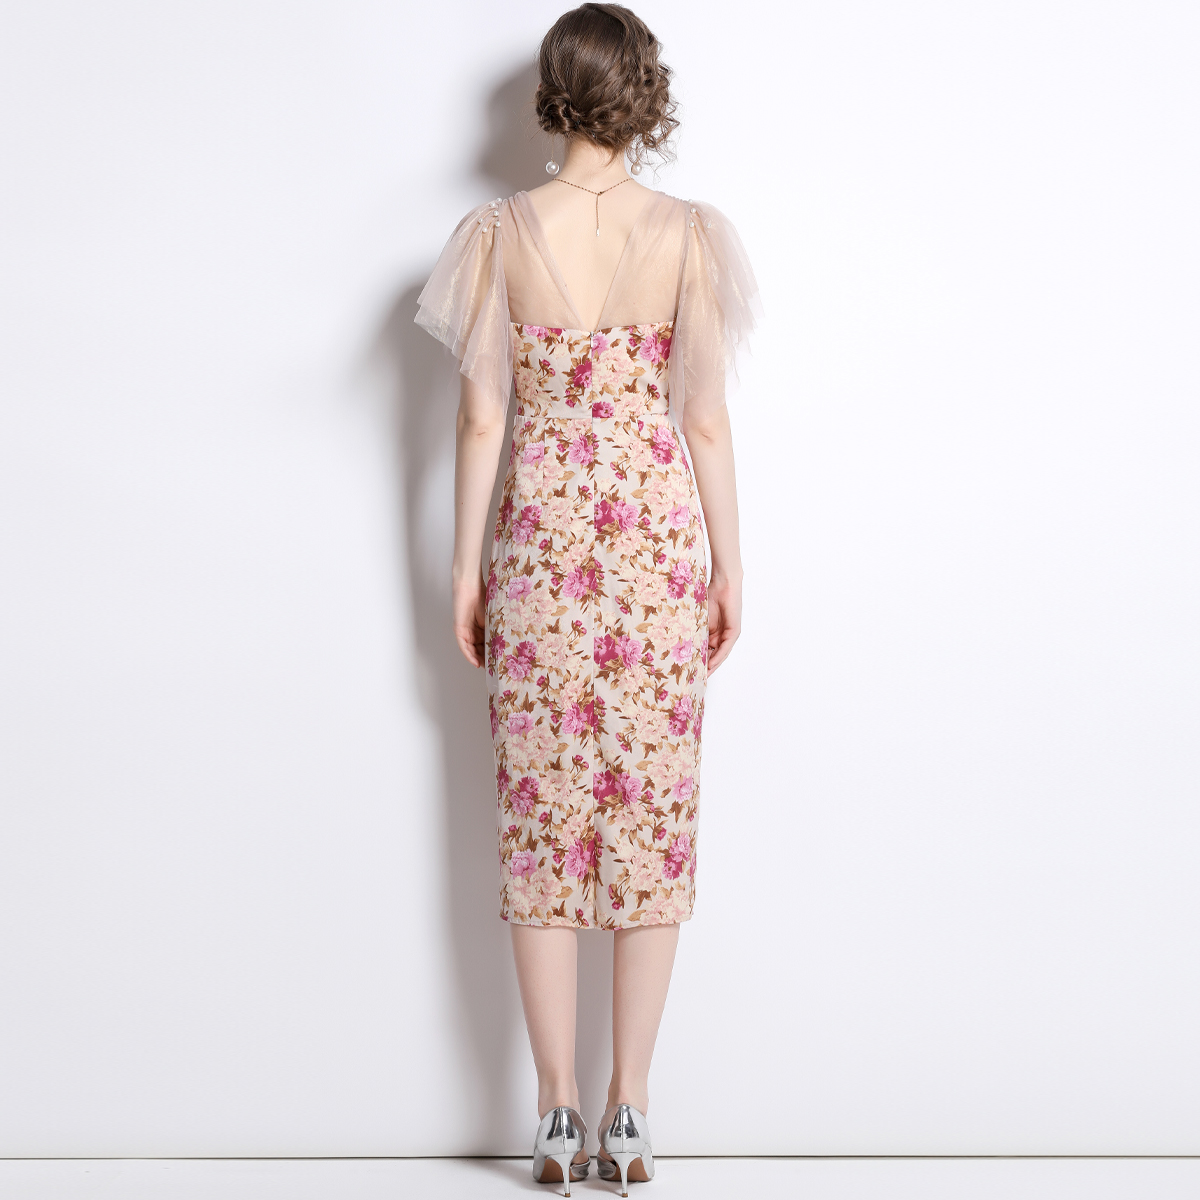 Slim flowers splice temperament gauze dress for women